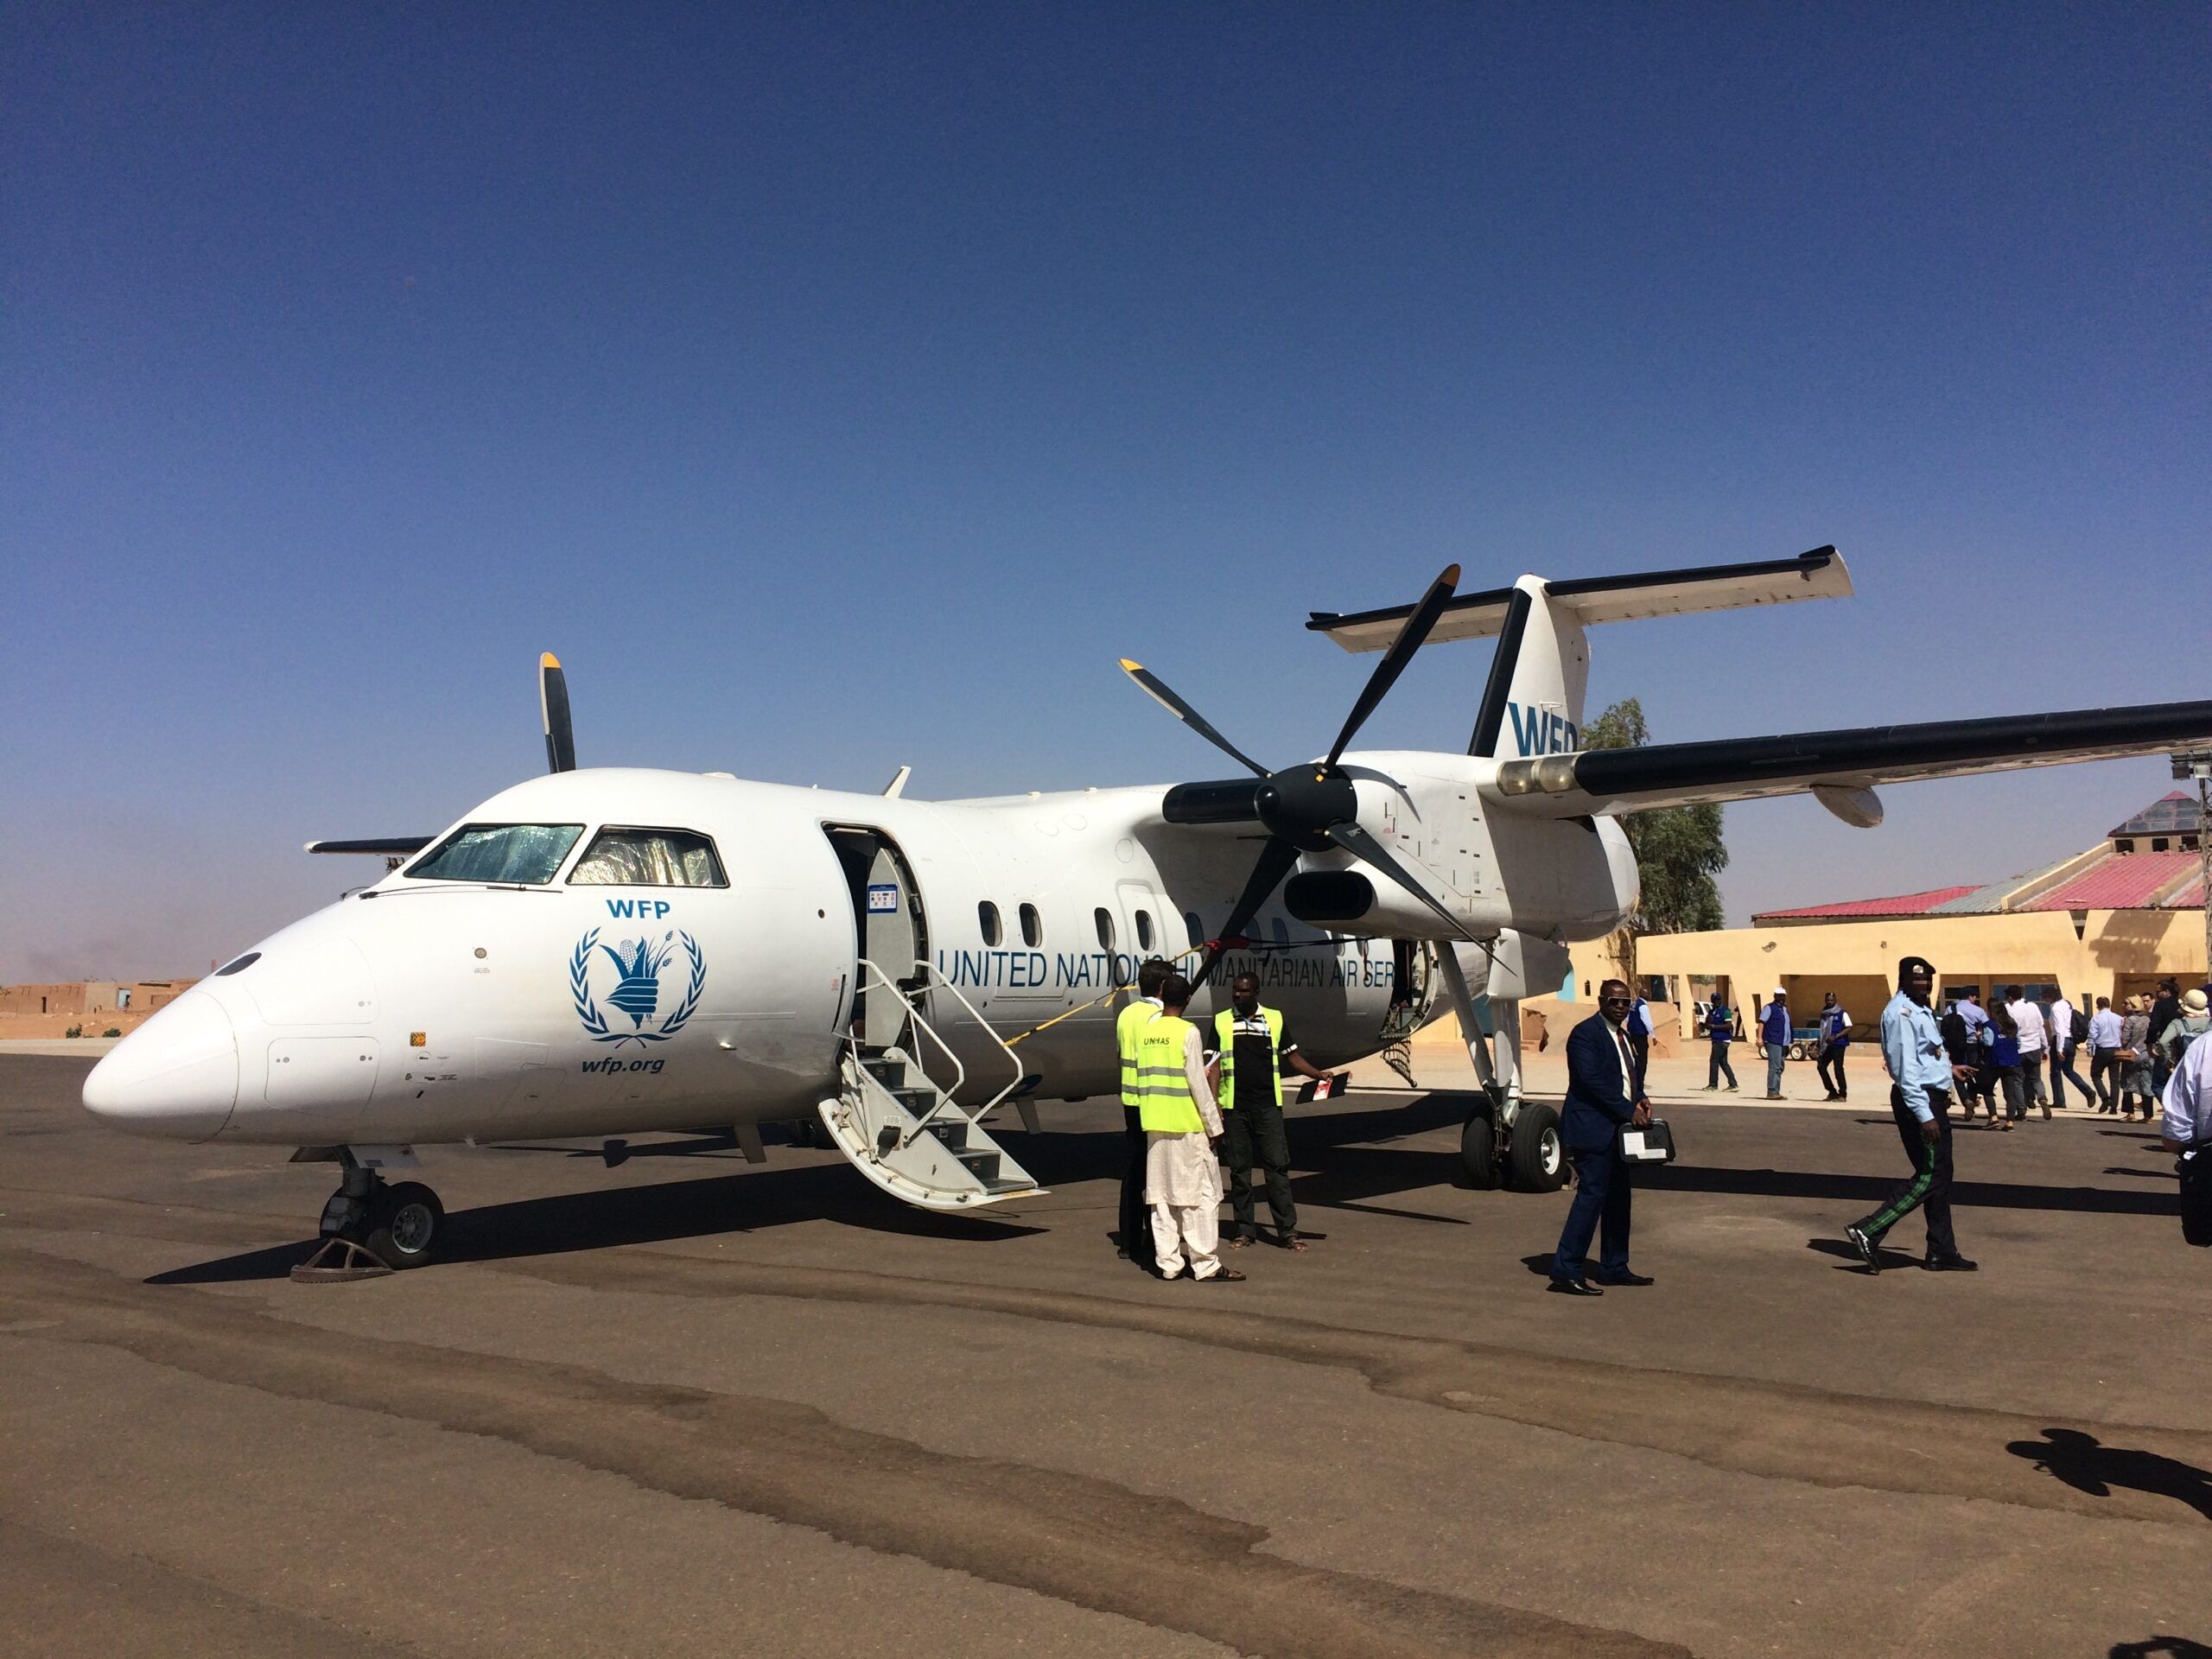 Niger junta evacuates families to Dubai, Burkina Faso amid ECOWAS invasion threat